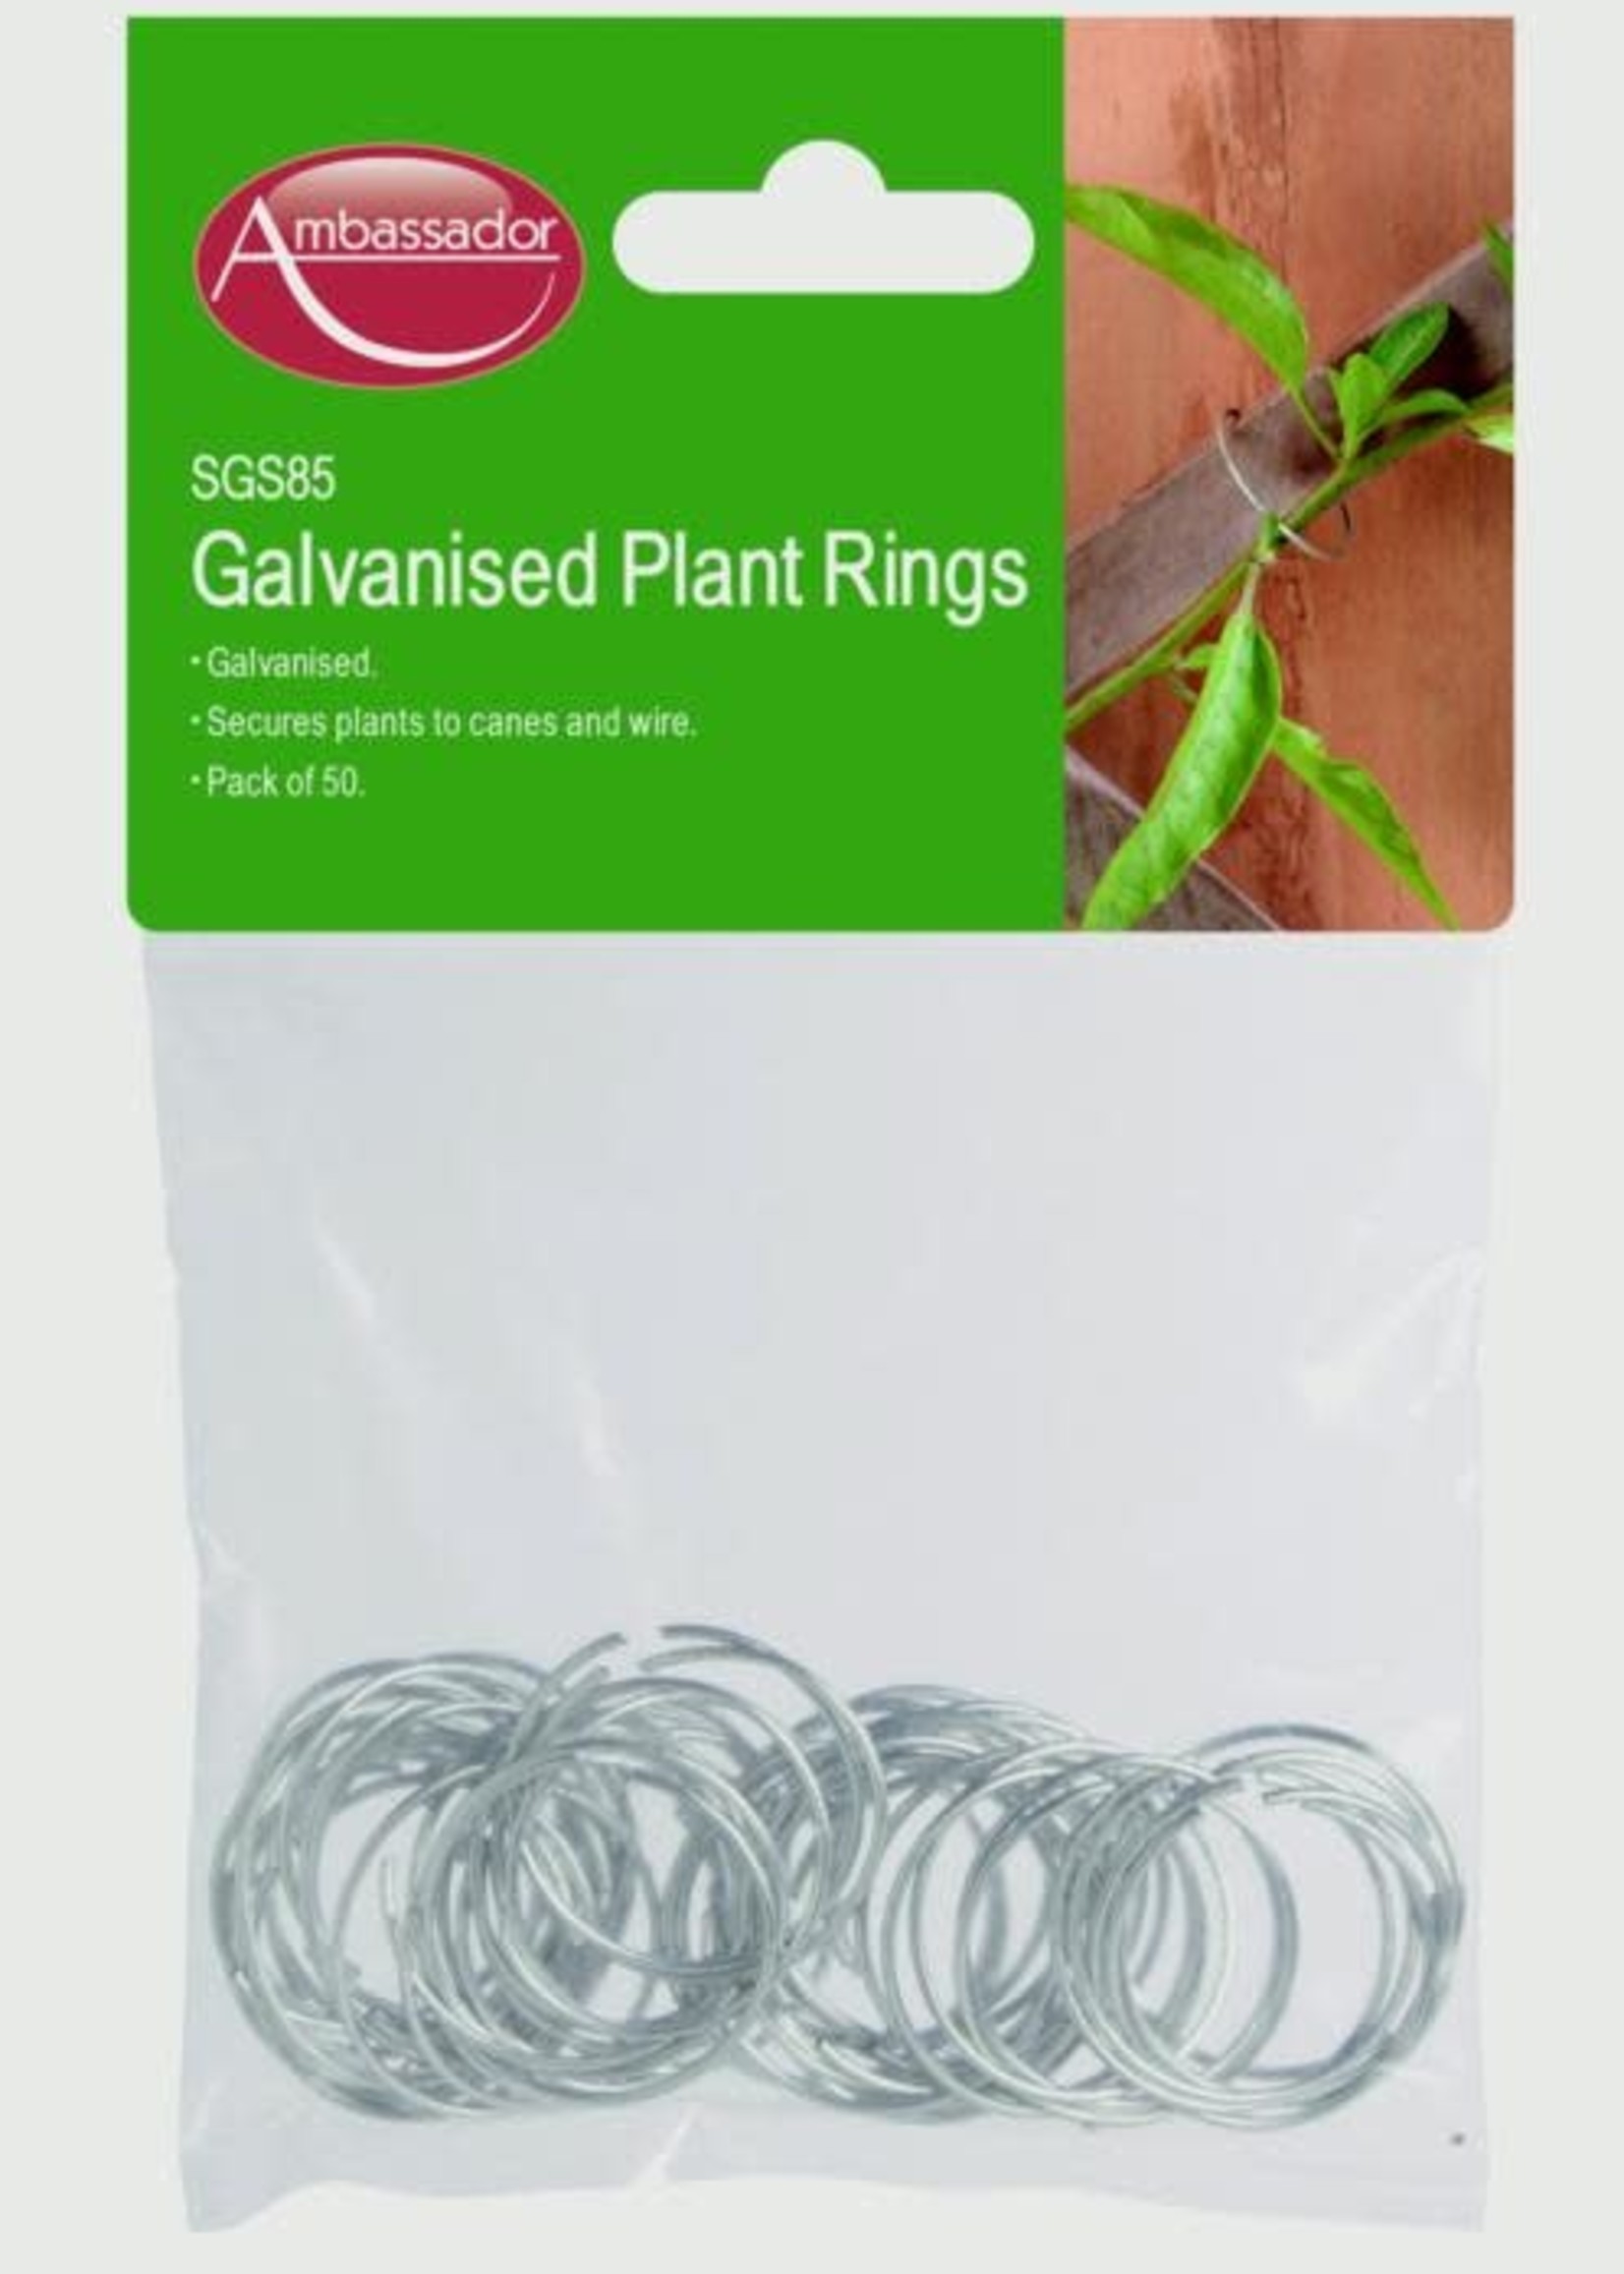 Ambassador Ambassador Galvanised Plant Rings